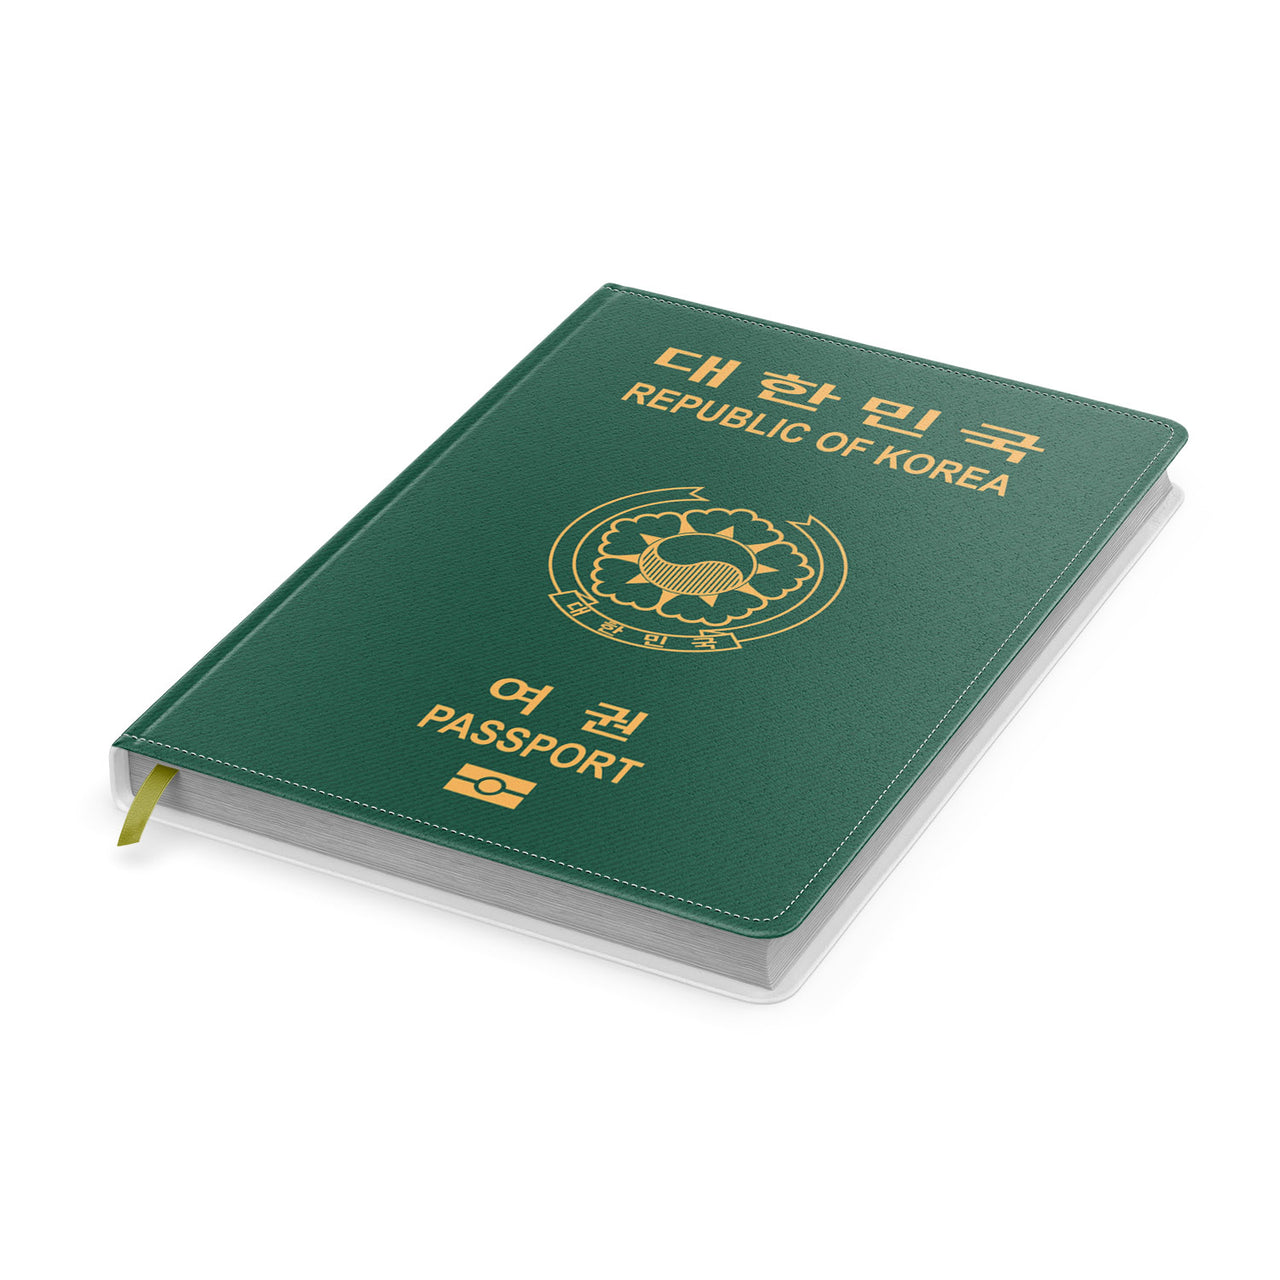 Korean Passport Designed Notebooks